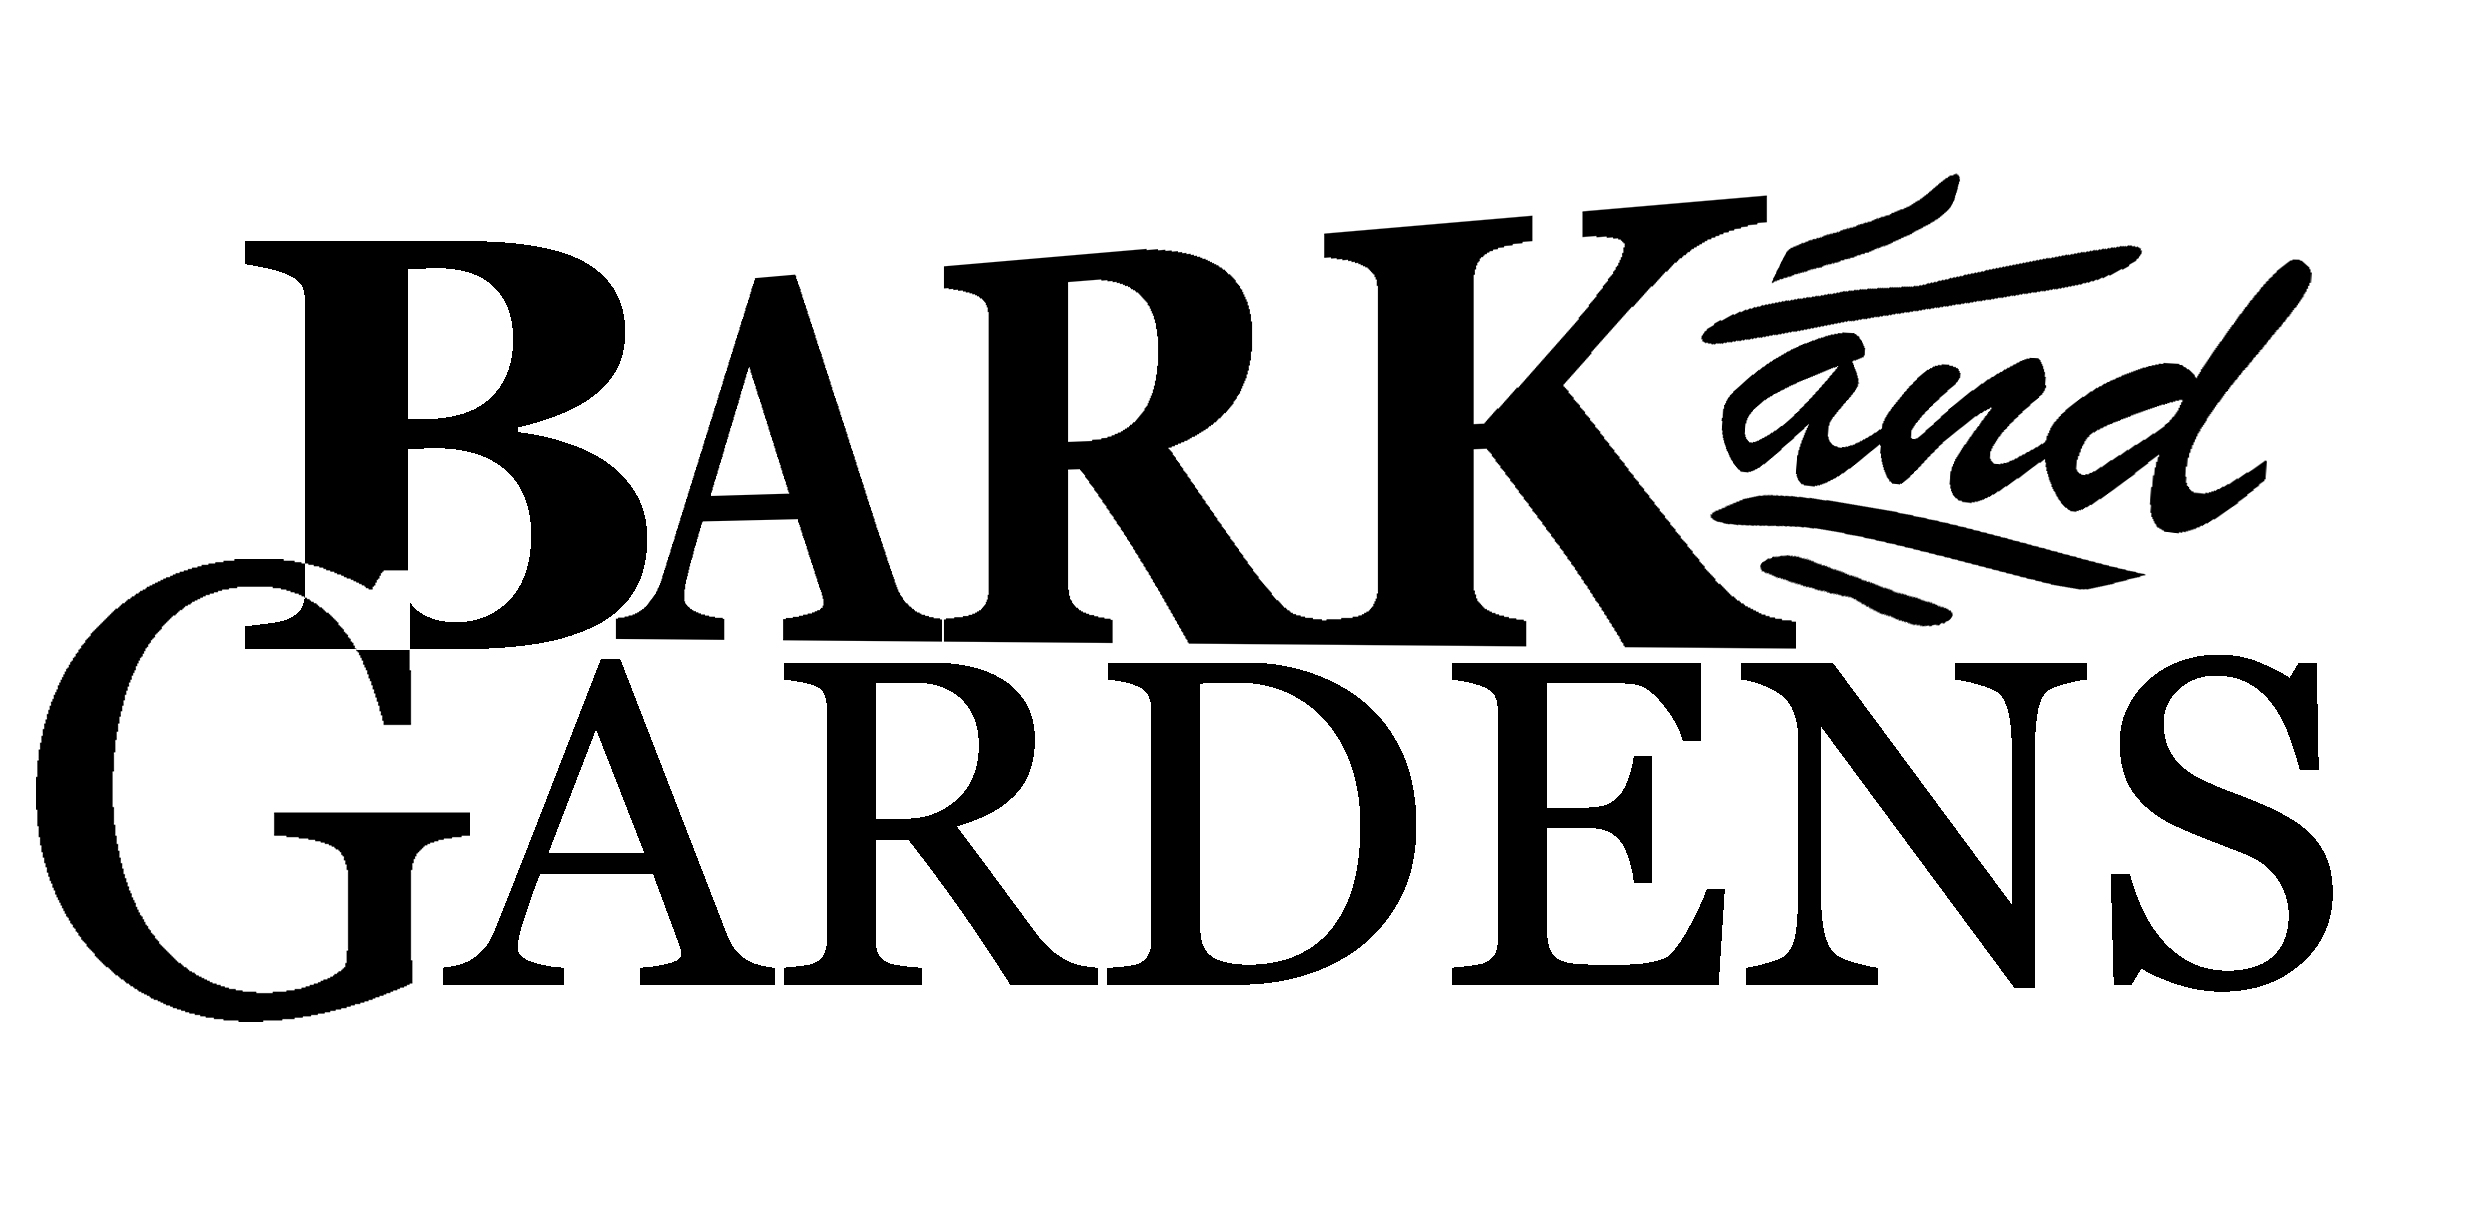 Bark and Gardens